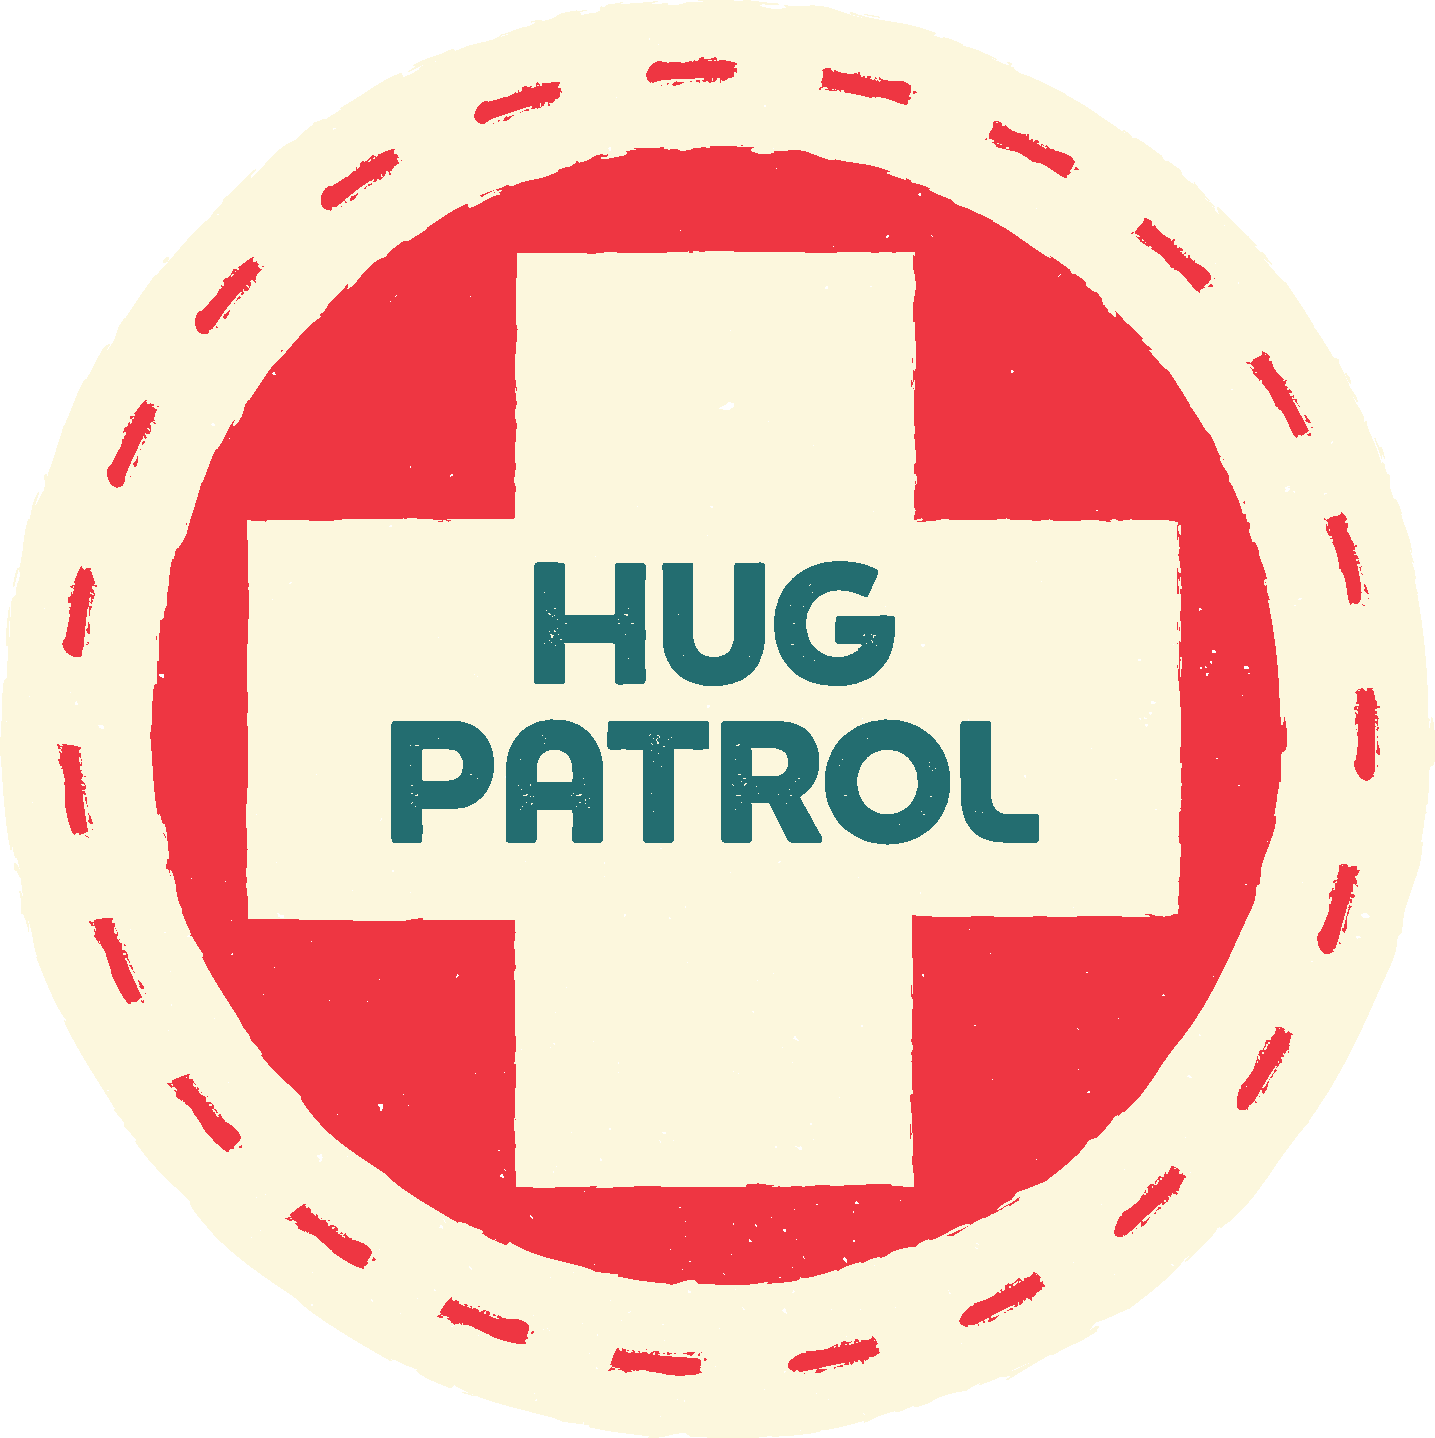 Hug Patrol